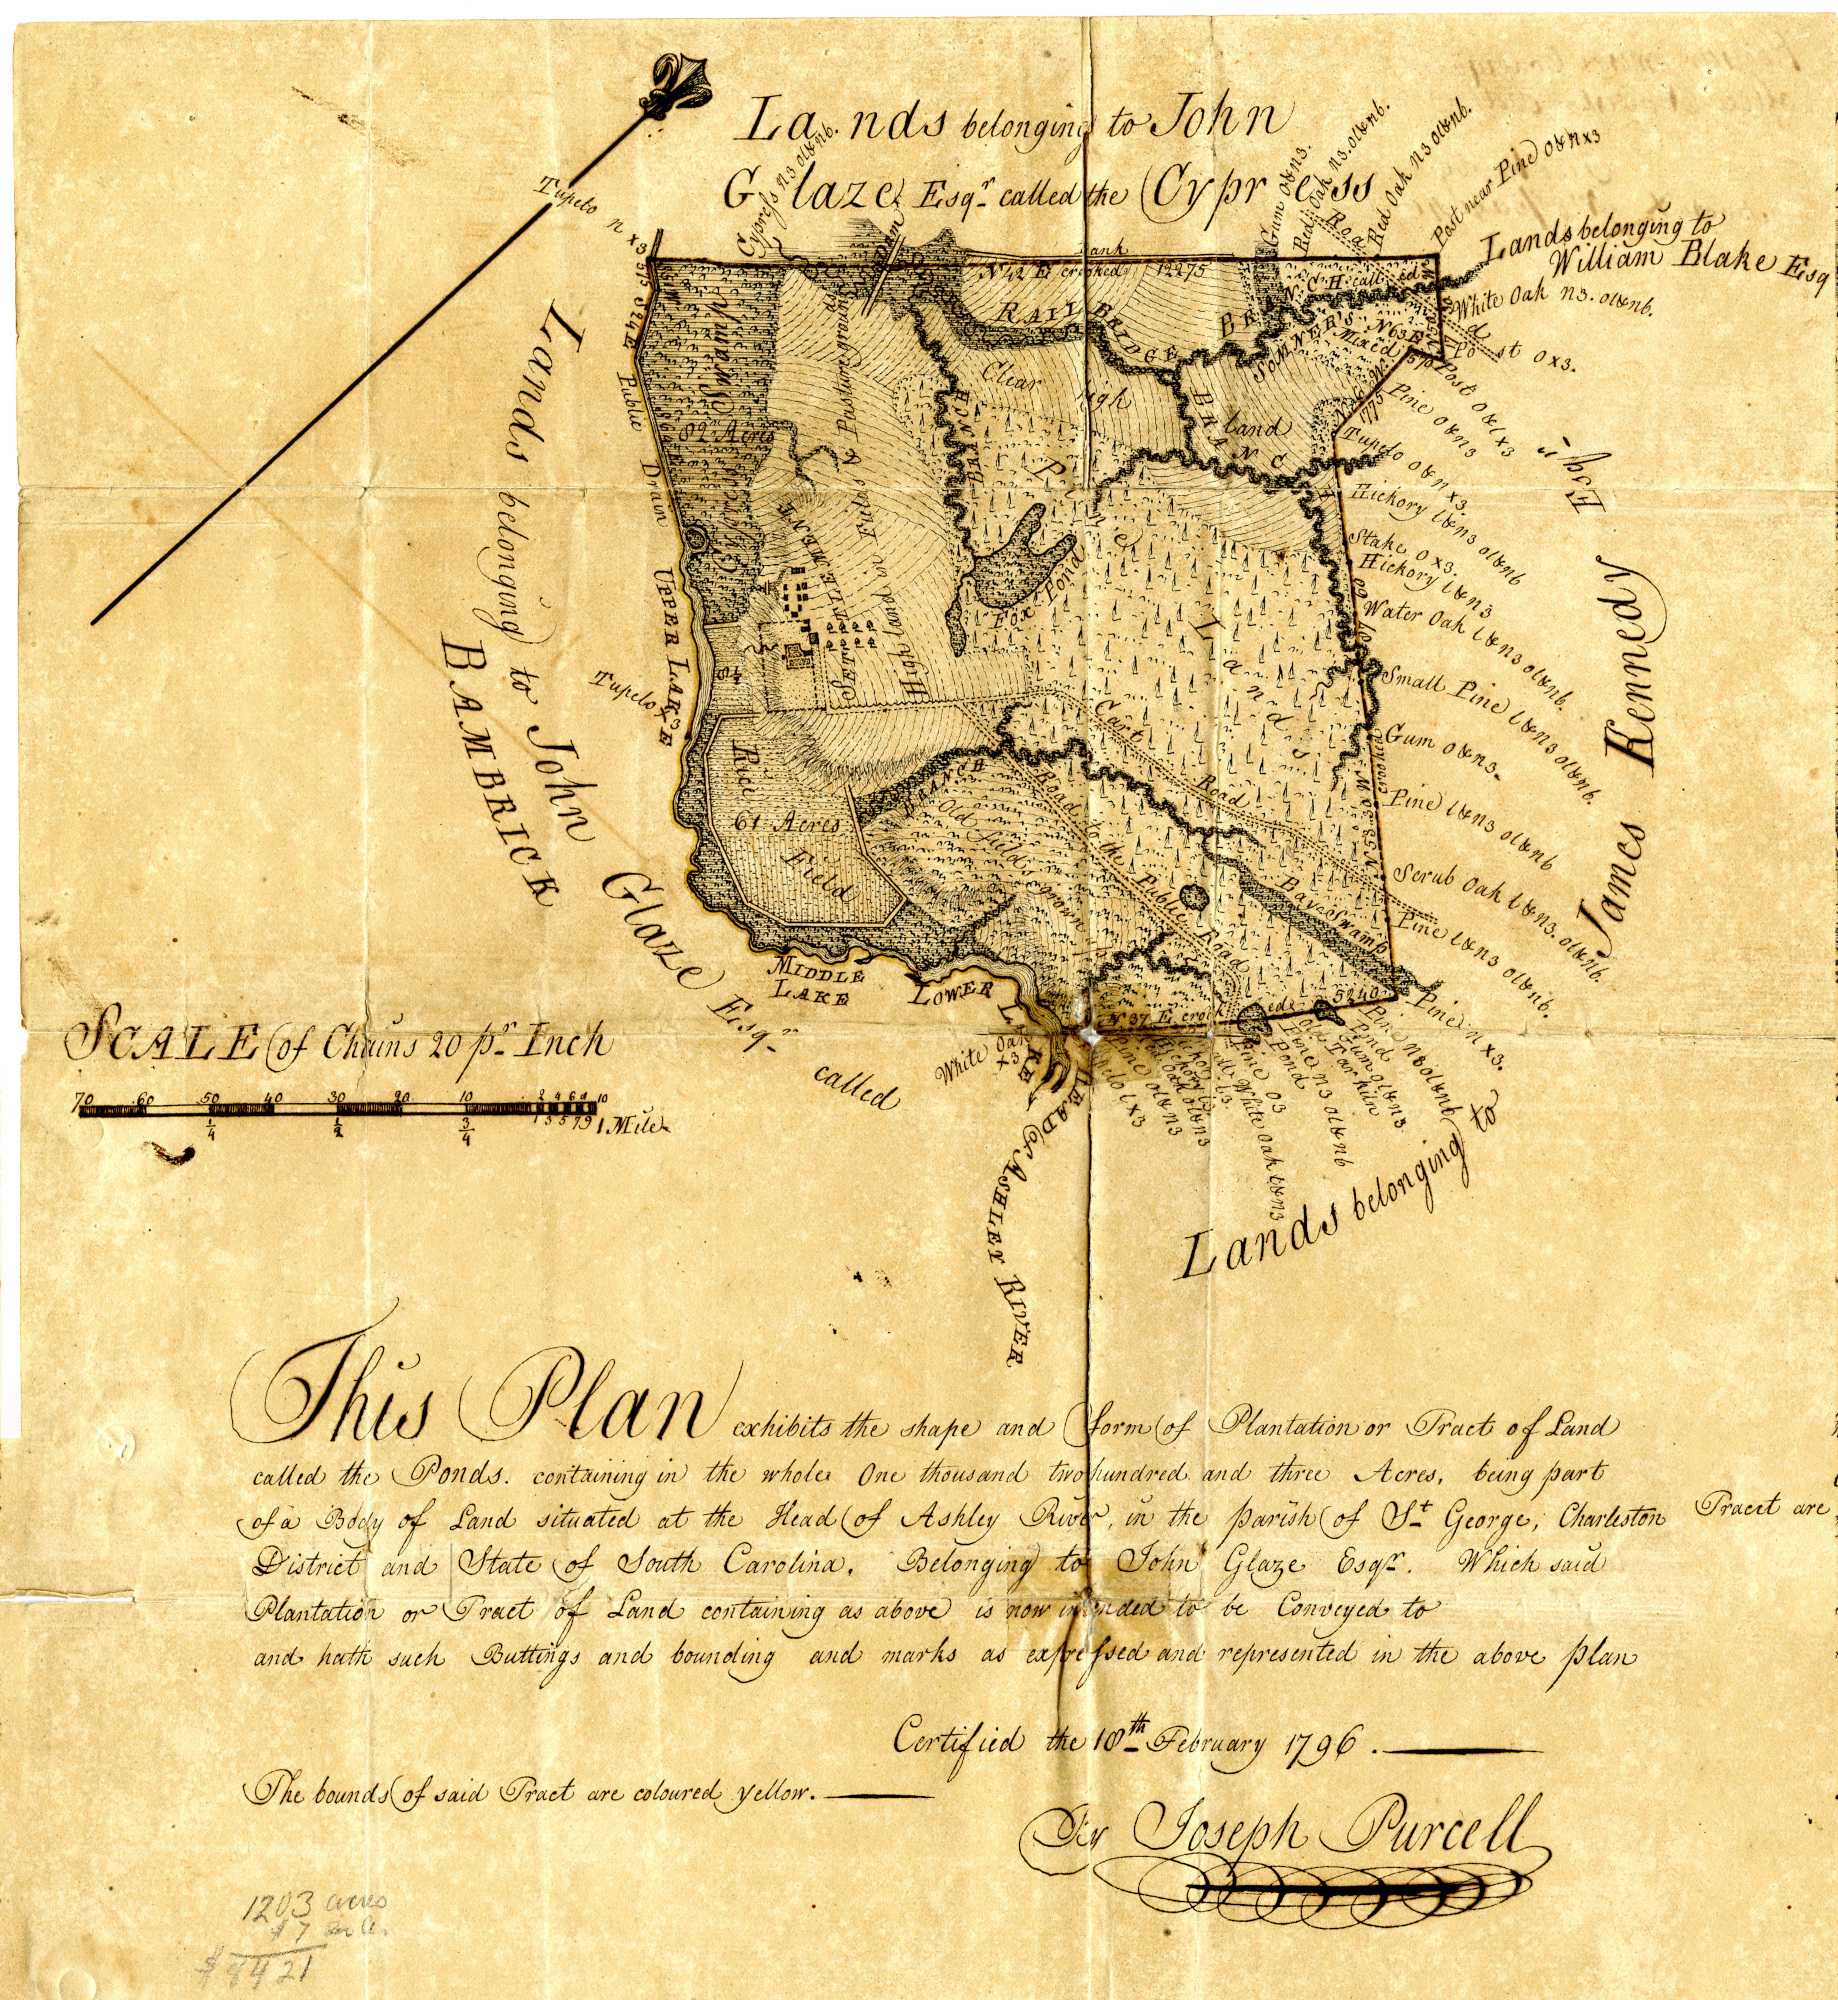 Image of land deed from Point of Pines Plantation, Edisto Island, South Carolina